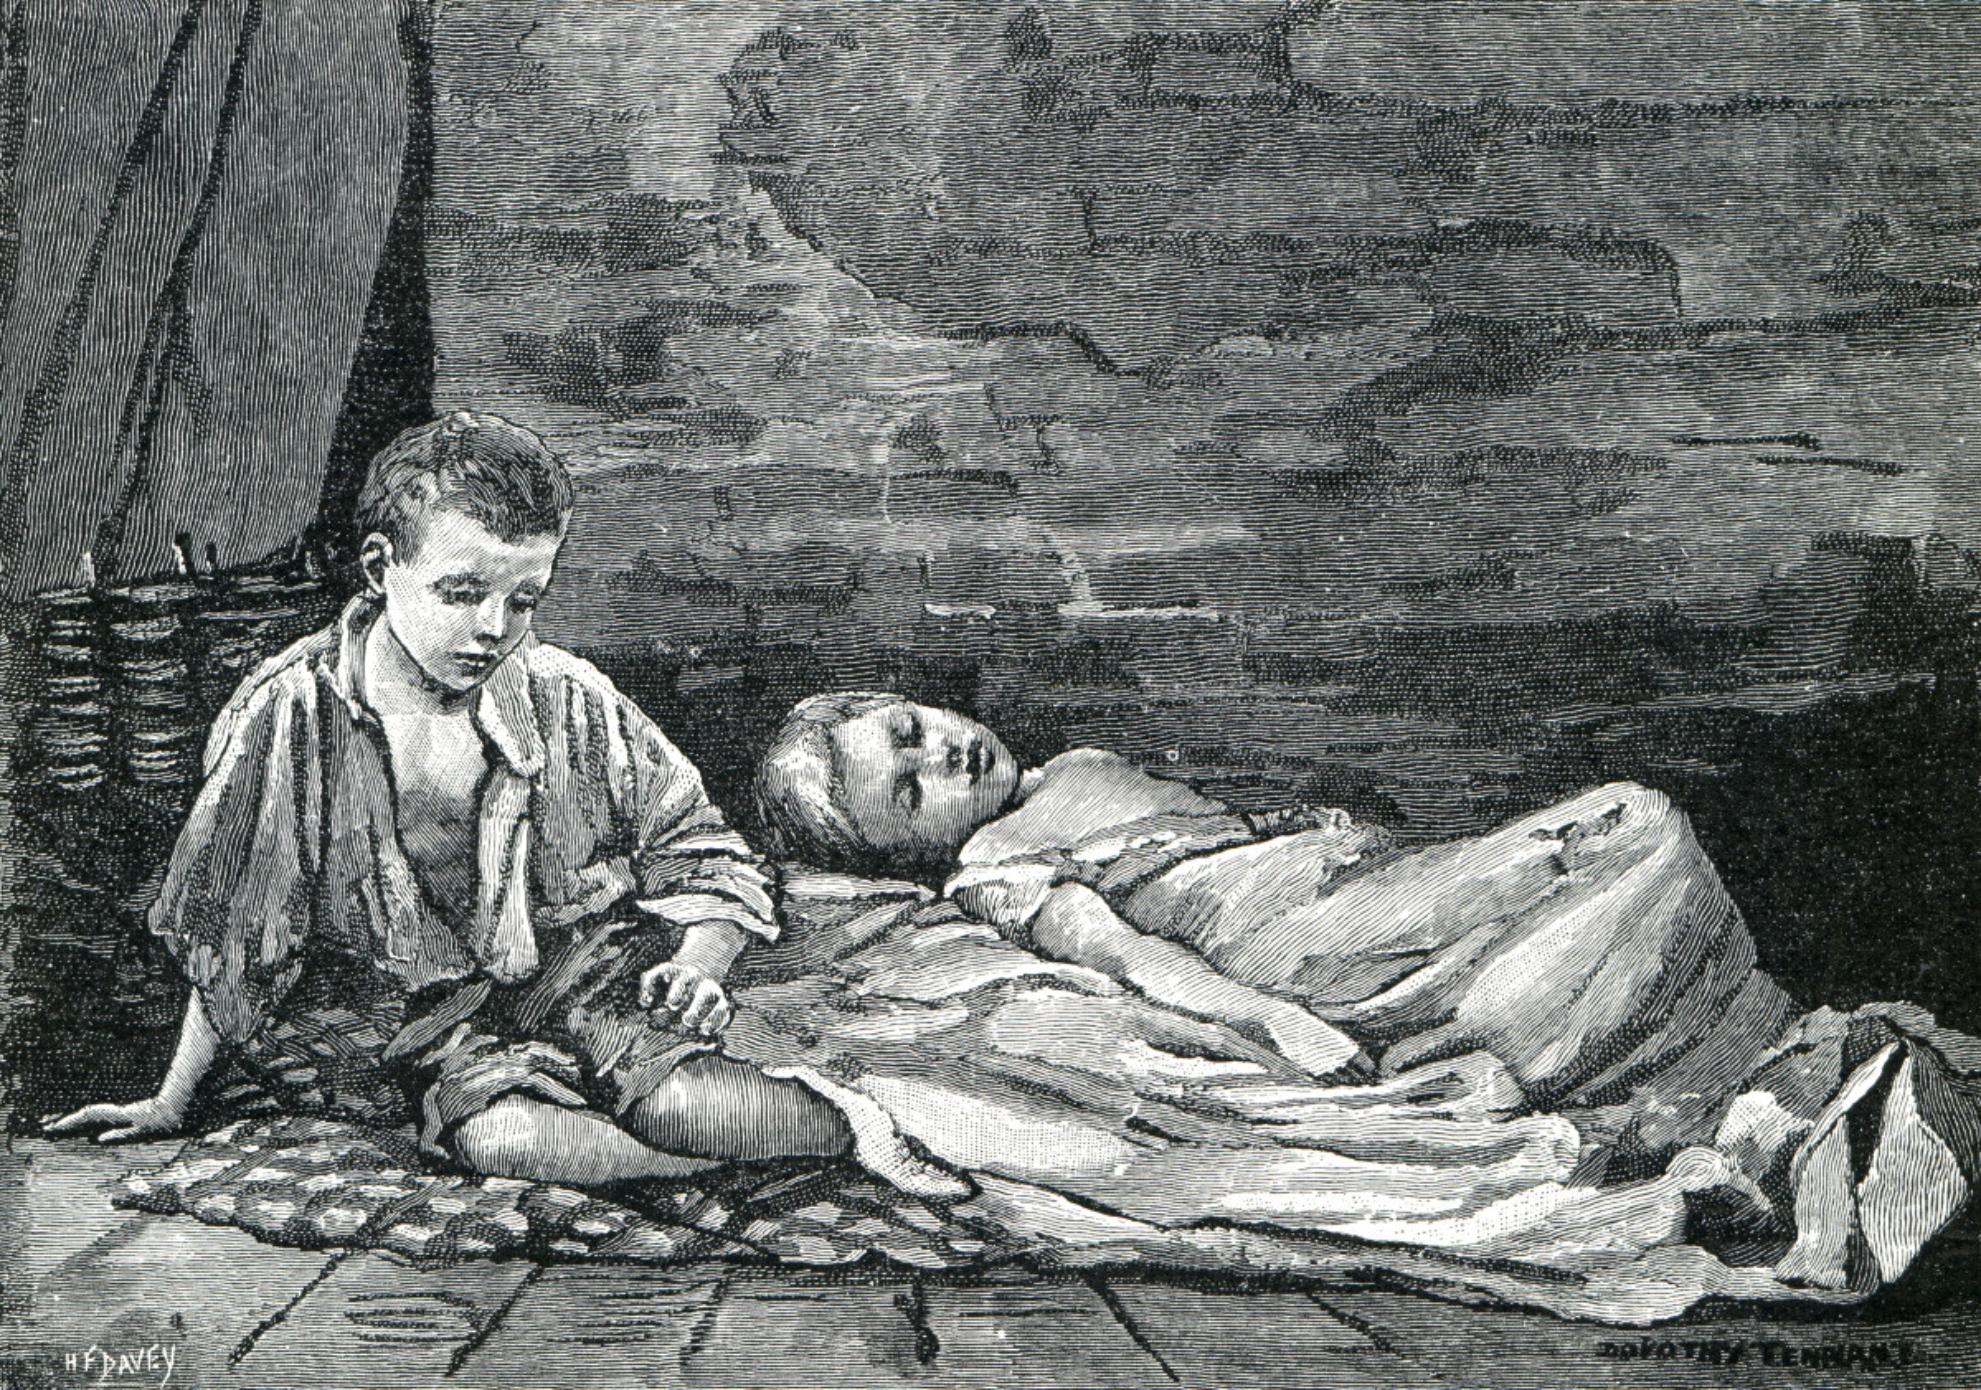 Amelia Dyer: Ο θηλυκός Ηρώδης – Η πιο αιμοσταγής κατά συρροή δολοφόνος που σκότωσε πάνω από 400 μωρά